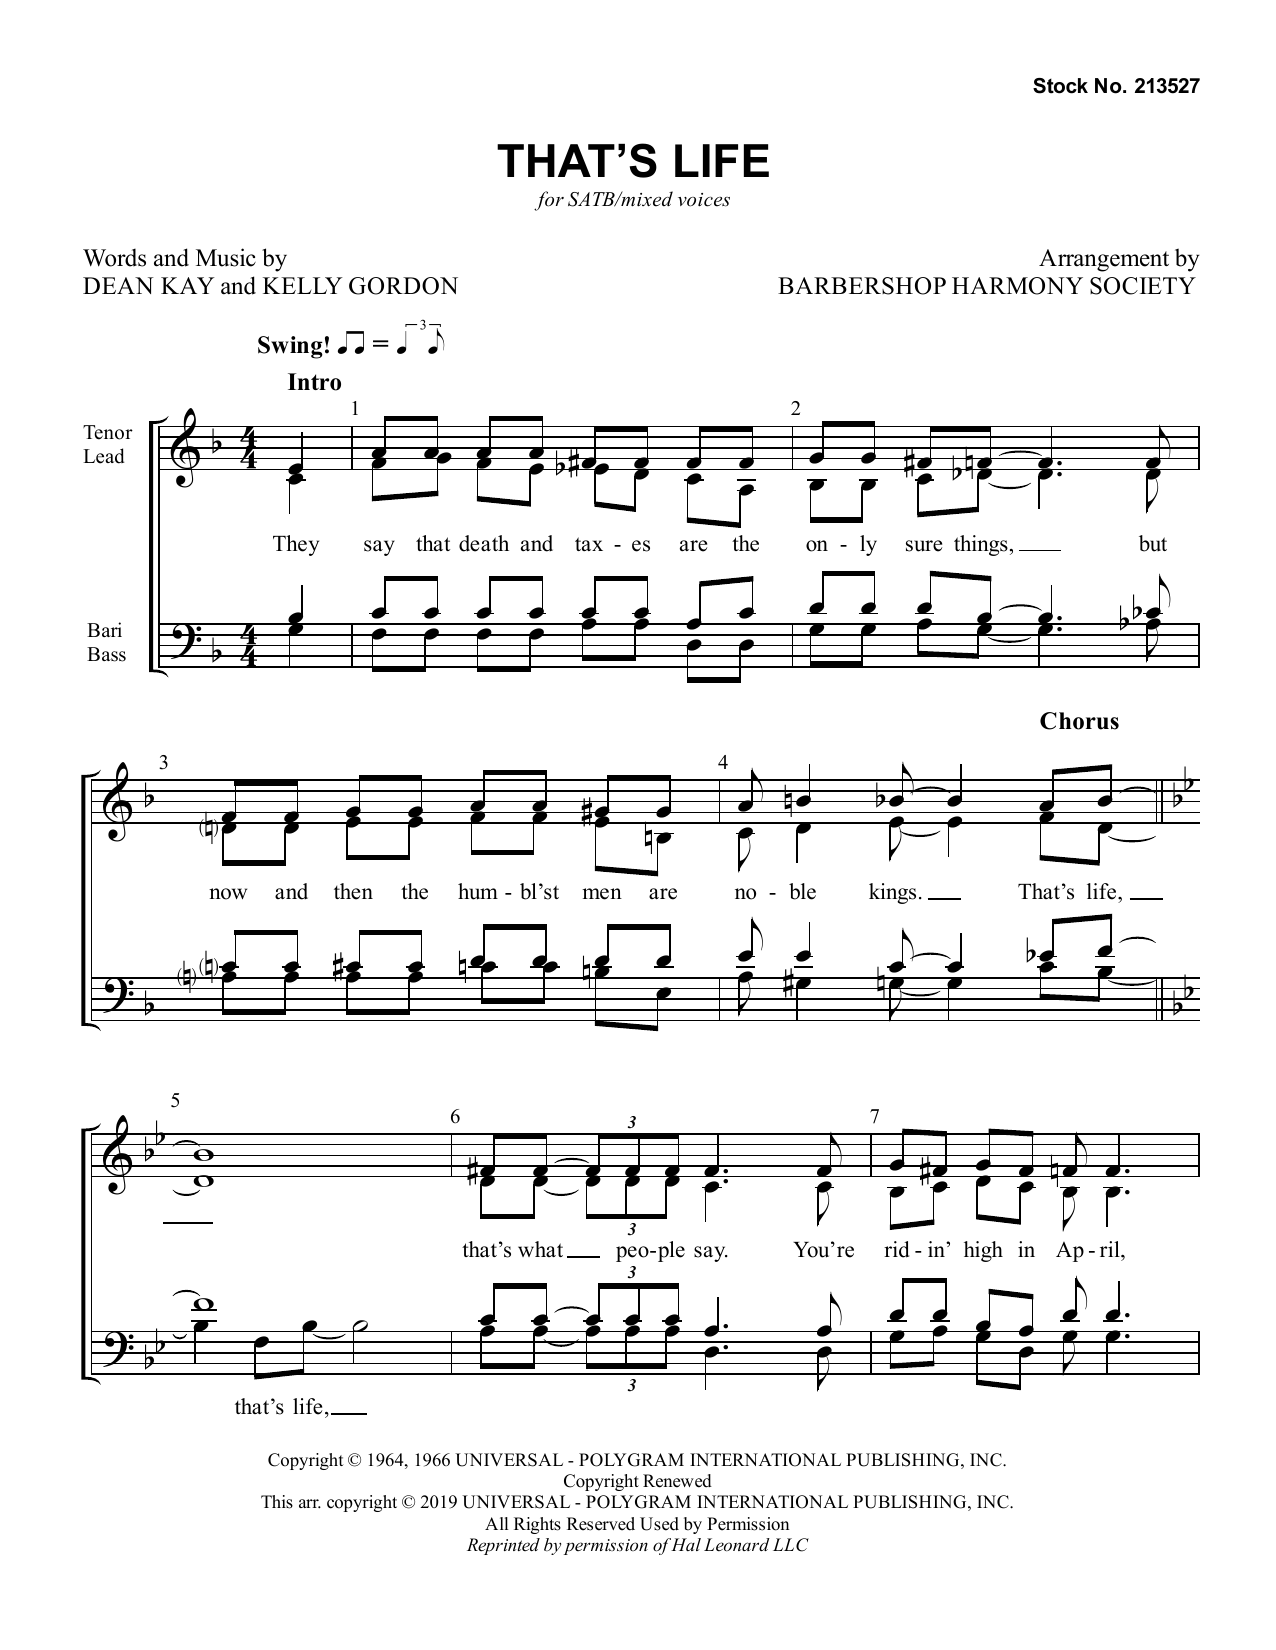 Dean Kay & Kelly Gordon That's Life (arr. Barbershop Harmony Society) Sheet Music Notes & Chords for SATB Choir - Download or Print PDF